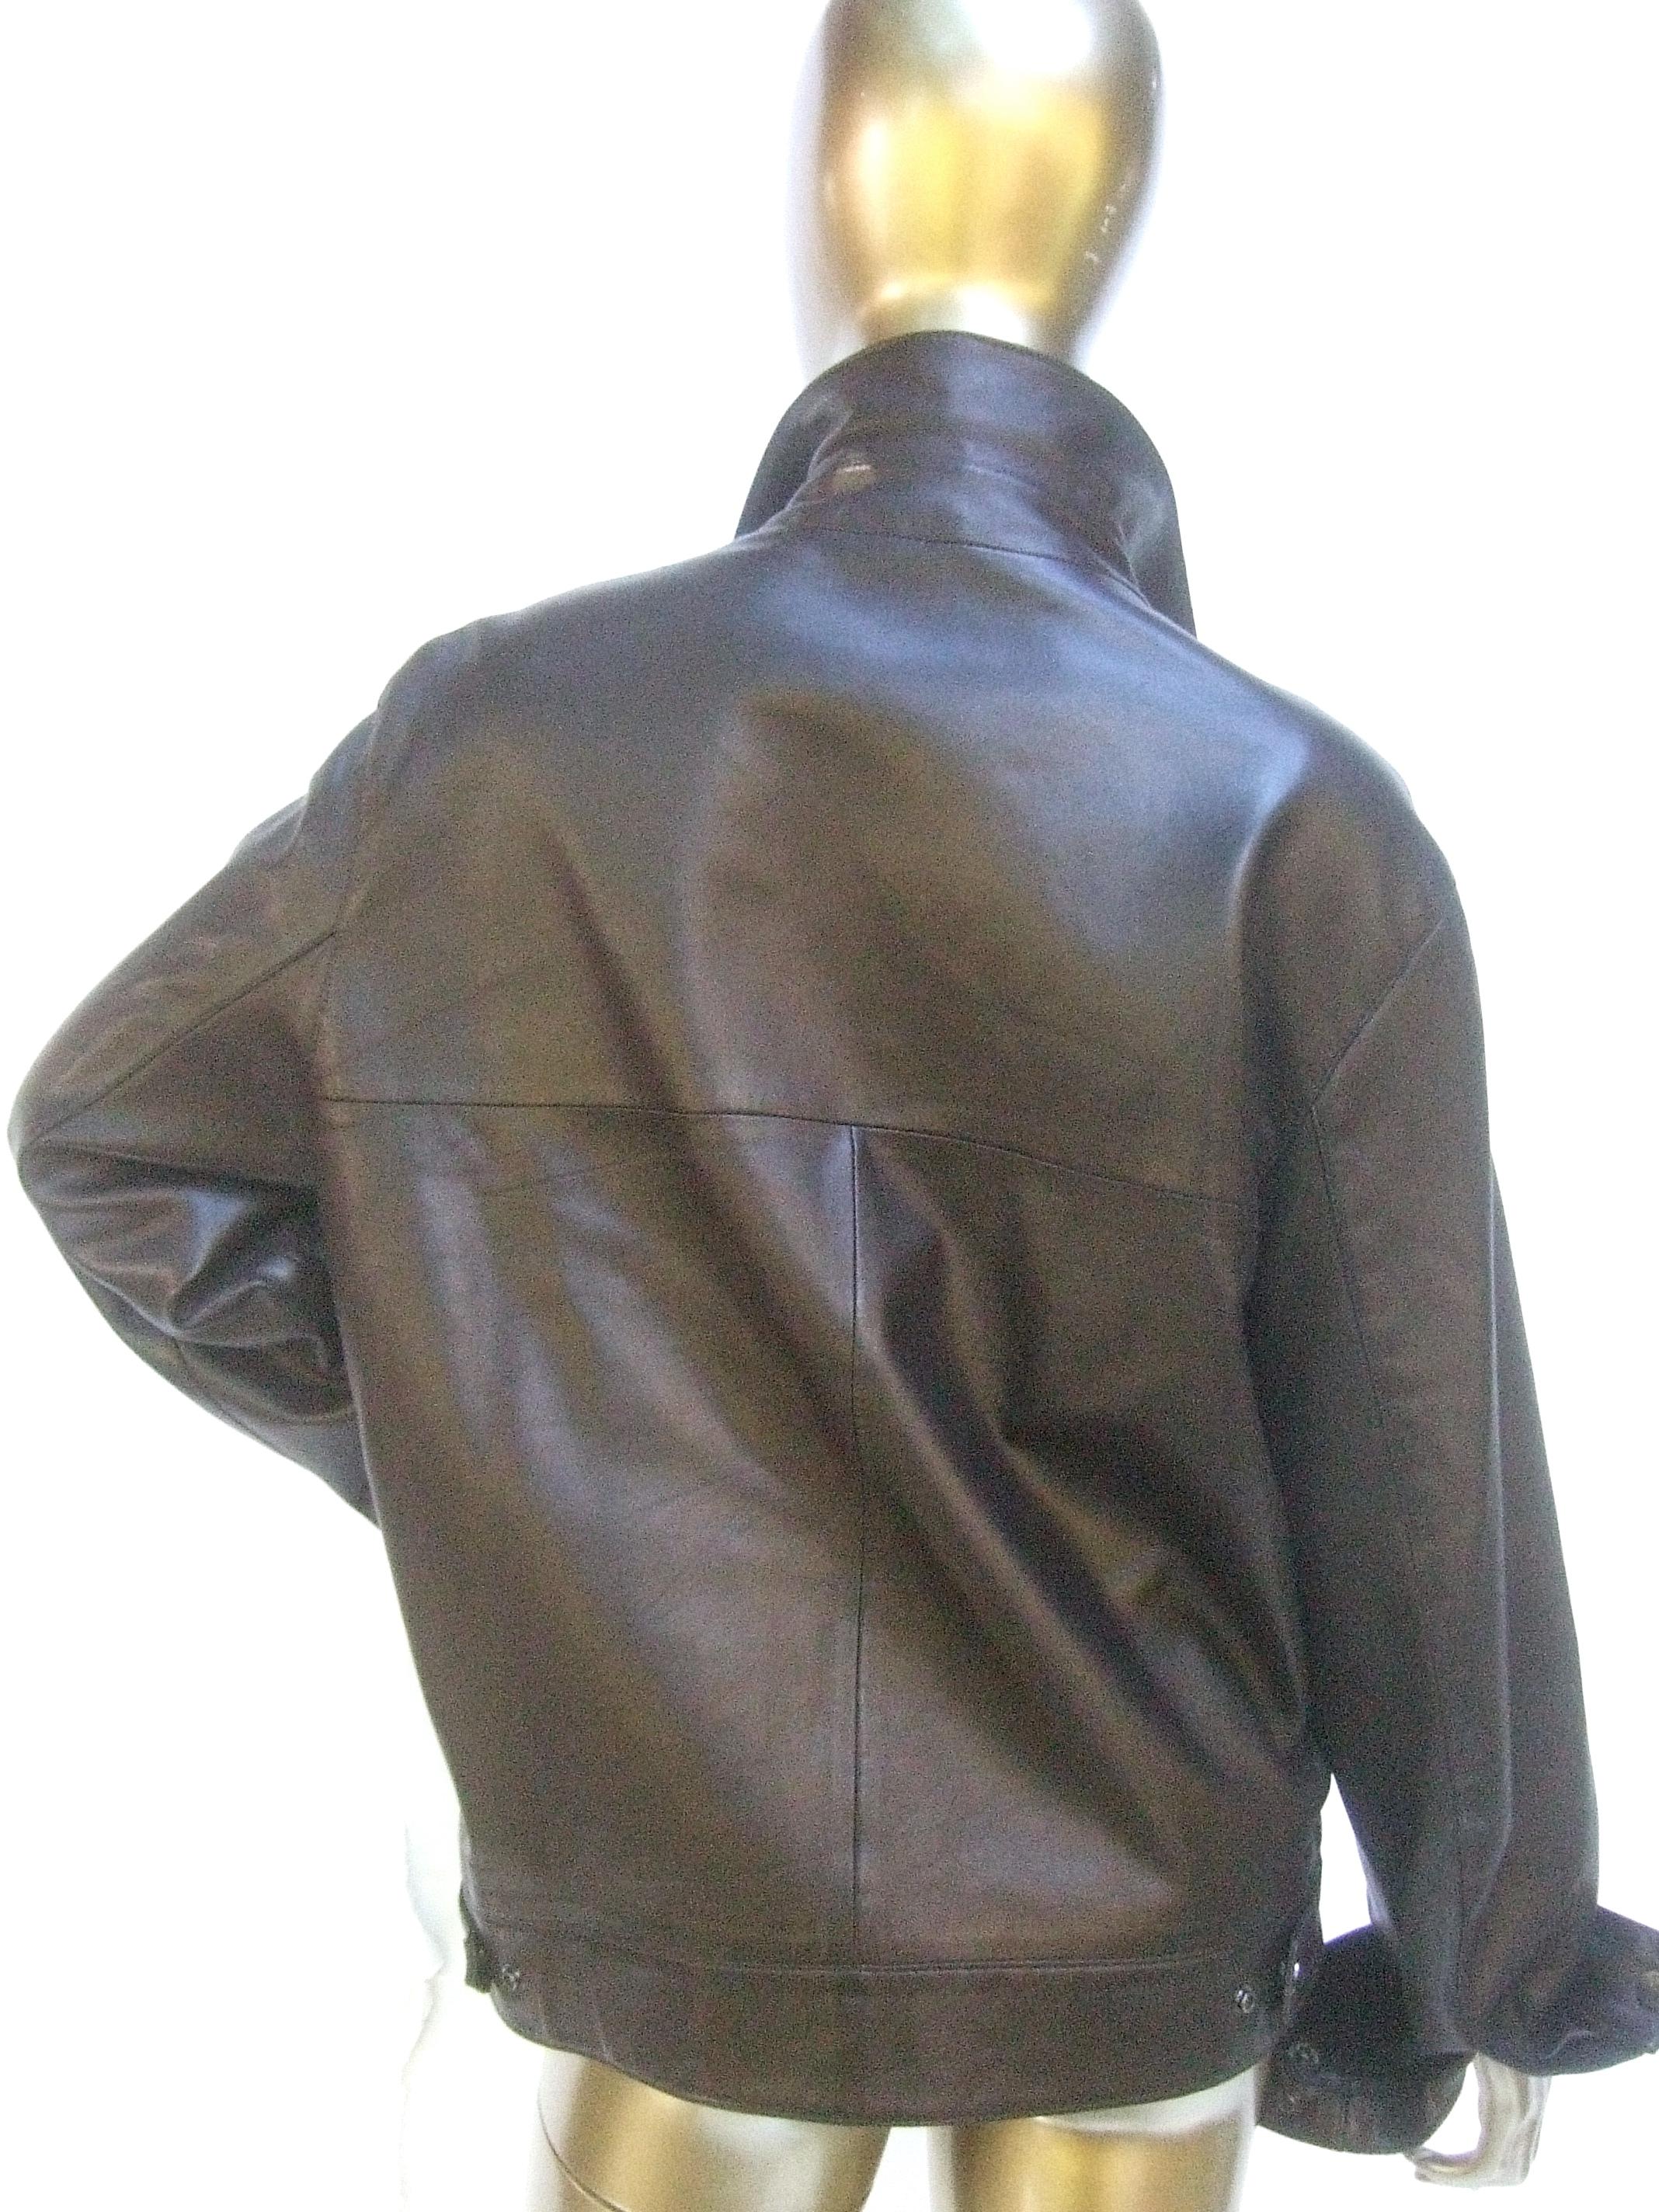 Salvatore Ferragamo Italian Chocolate Brown Leather Unisex Jacket circa 21st C For Sale 2